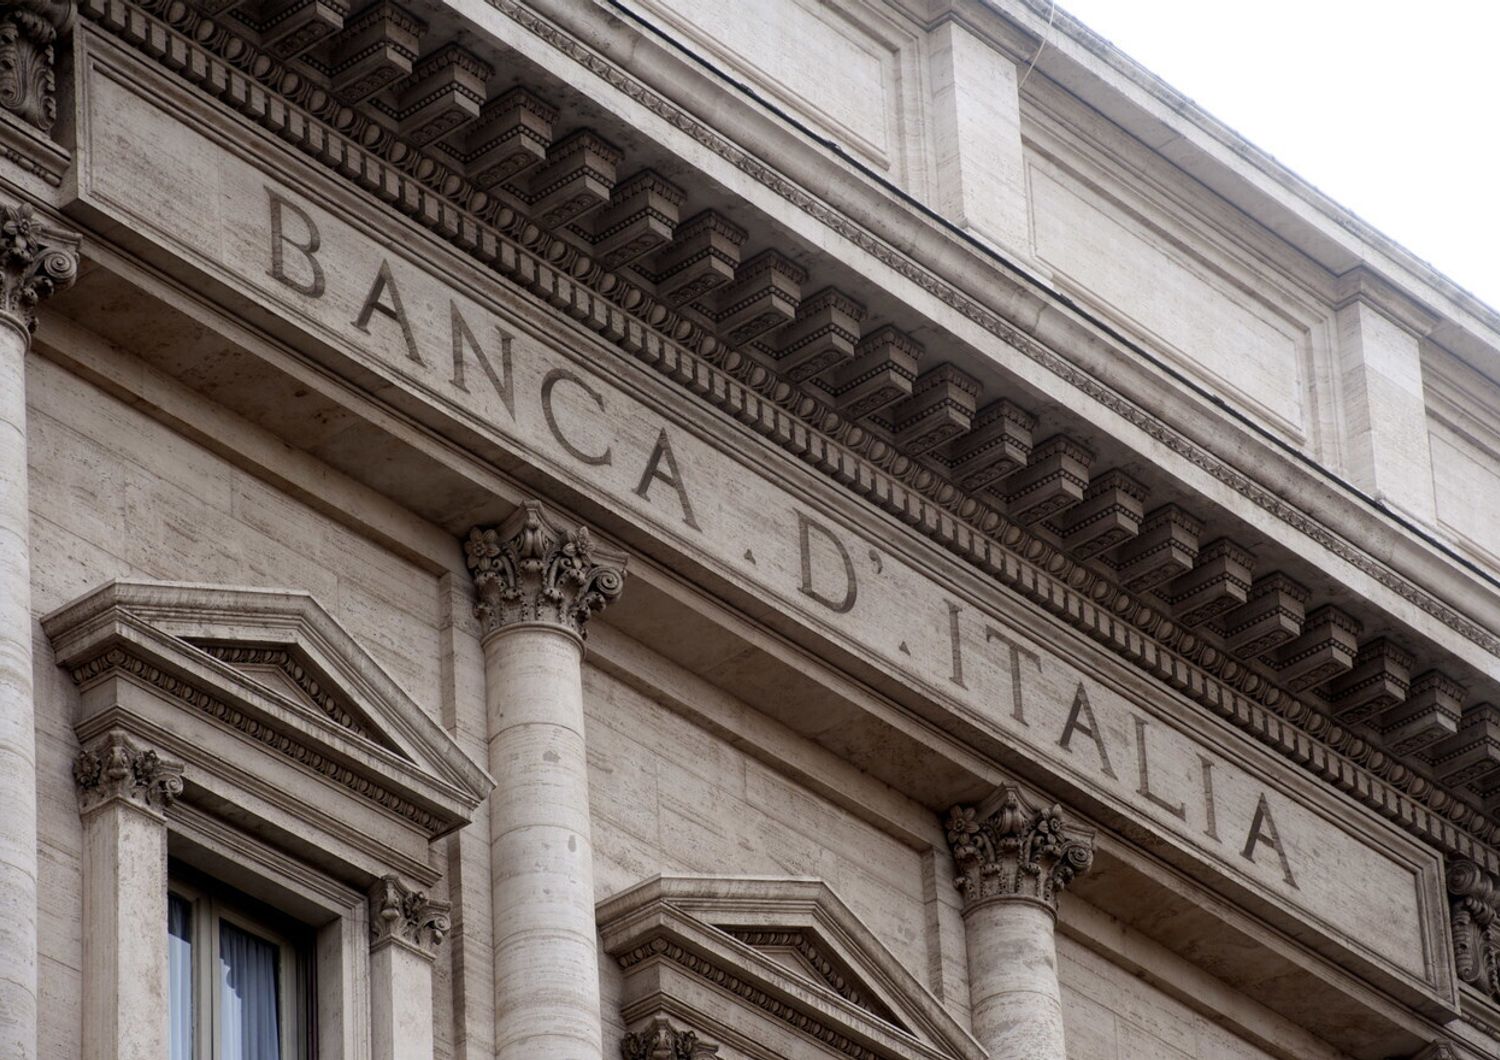 &nbsp; Bankitalia, Banca d'Italia